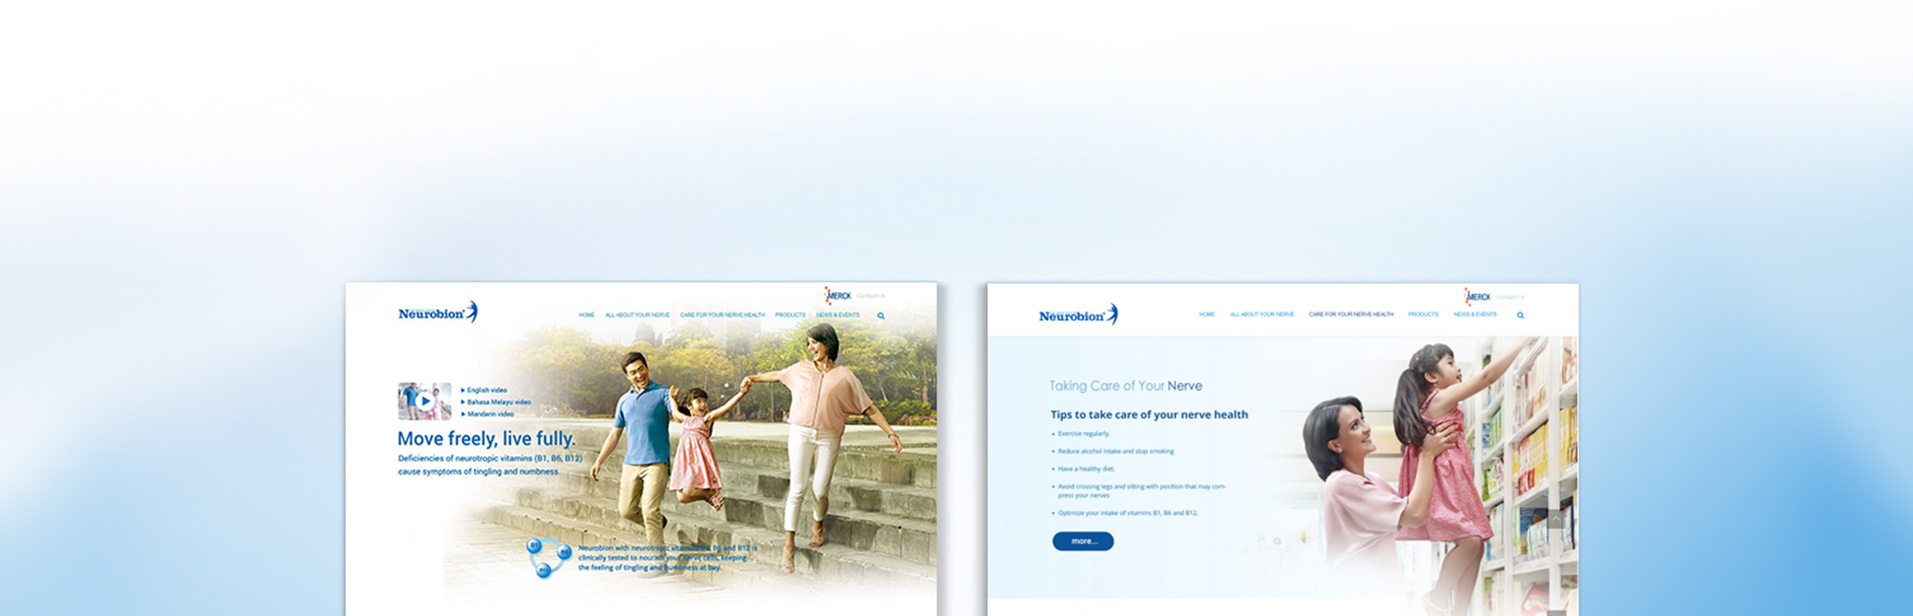 Portfolio design inspiration website, mobile, responsive komunigrafik 2020 for client baywalk mall